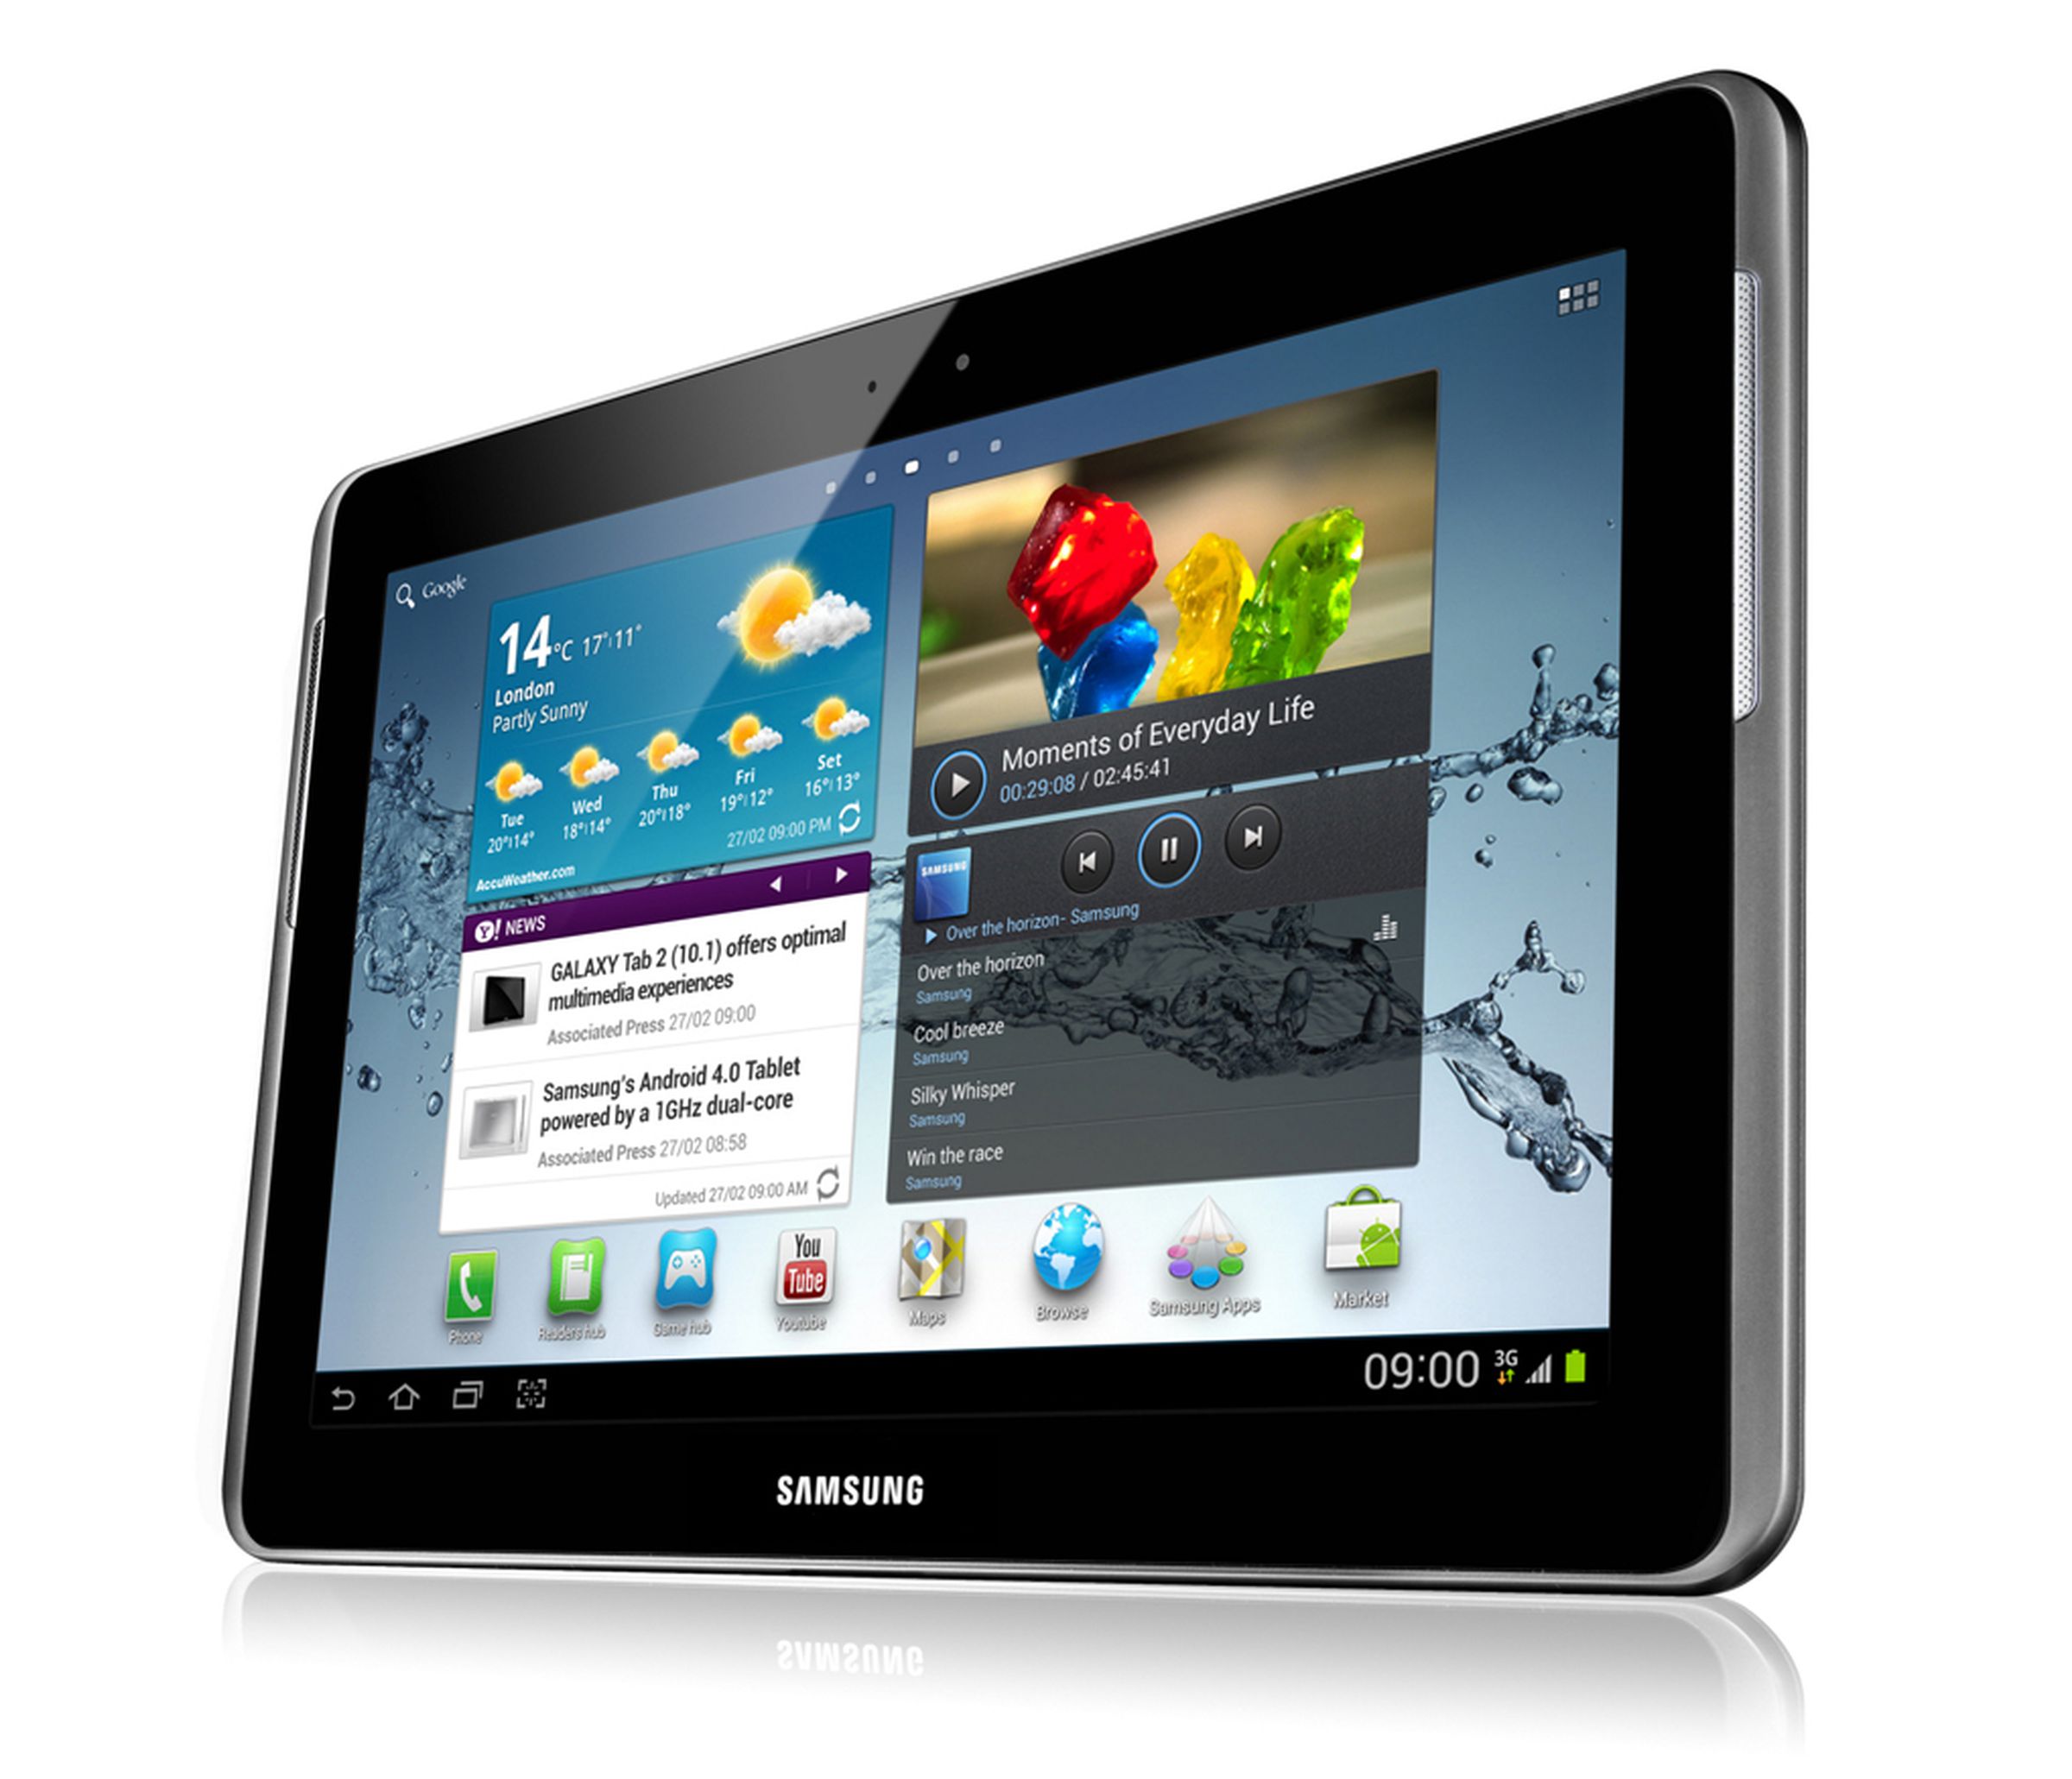 Samsung Galaxy Tab 2 (10.1) press images